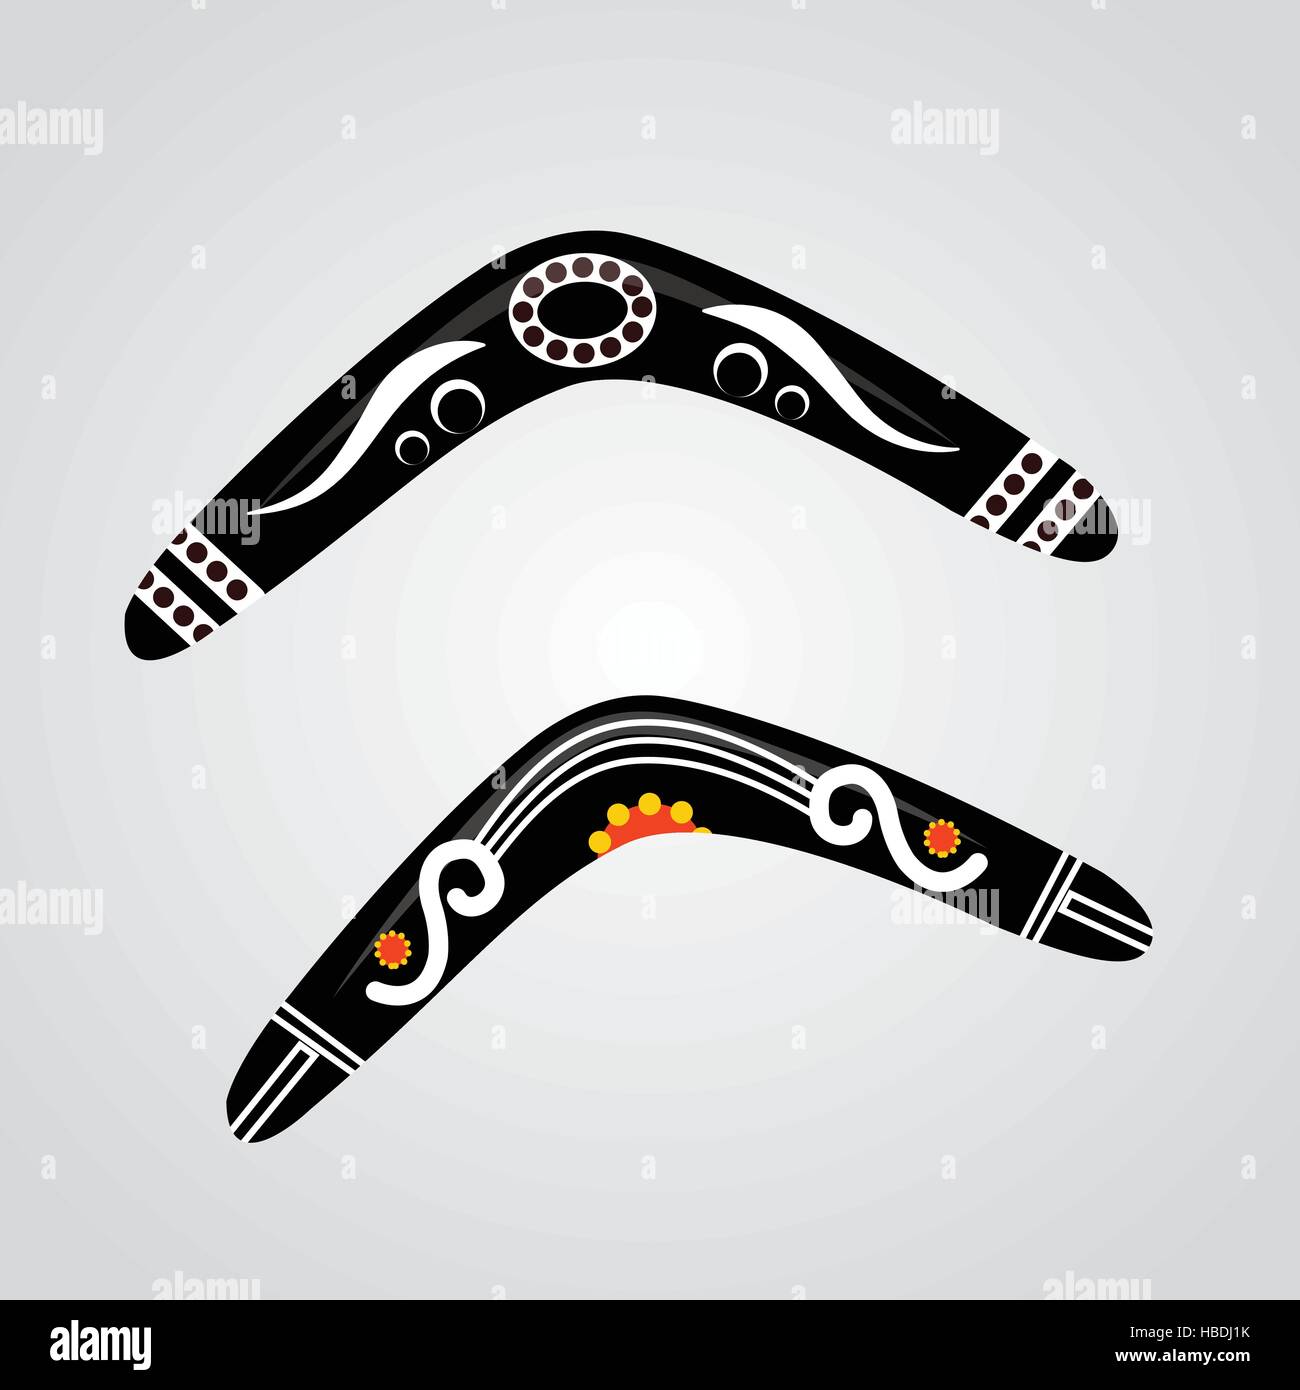 Boomerang australien vecteur. Illustration de Vecteur